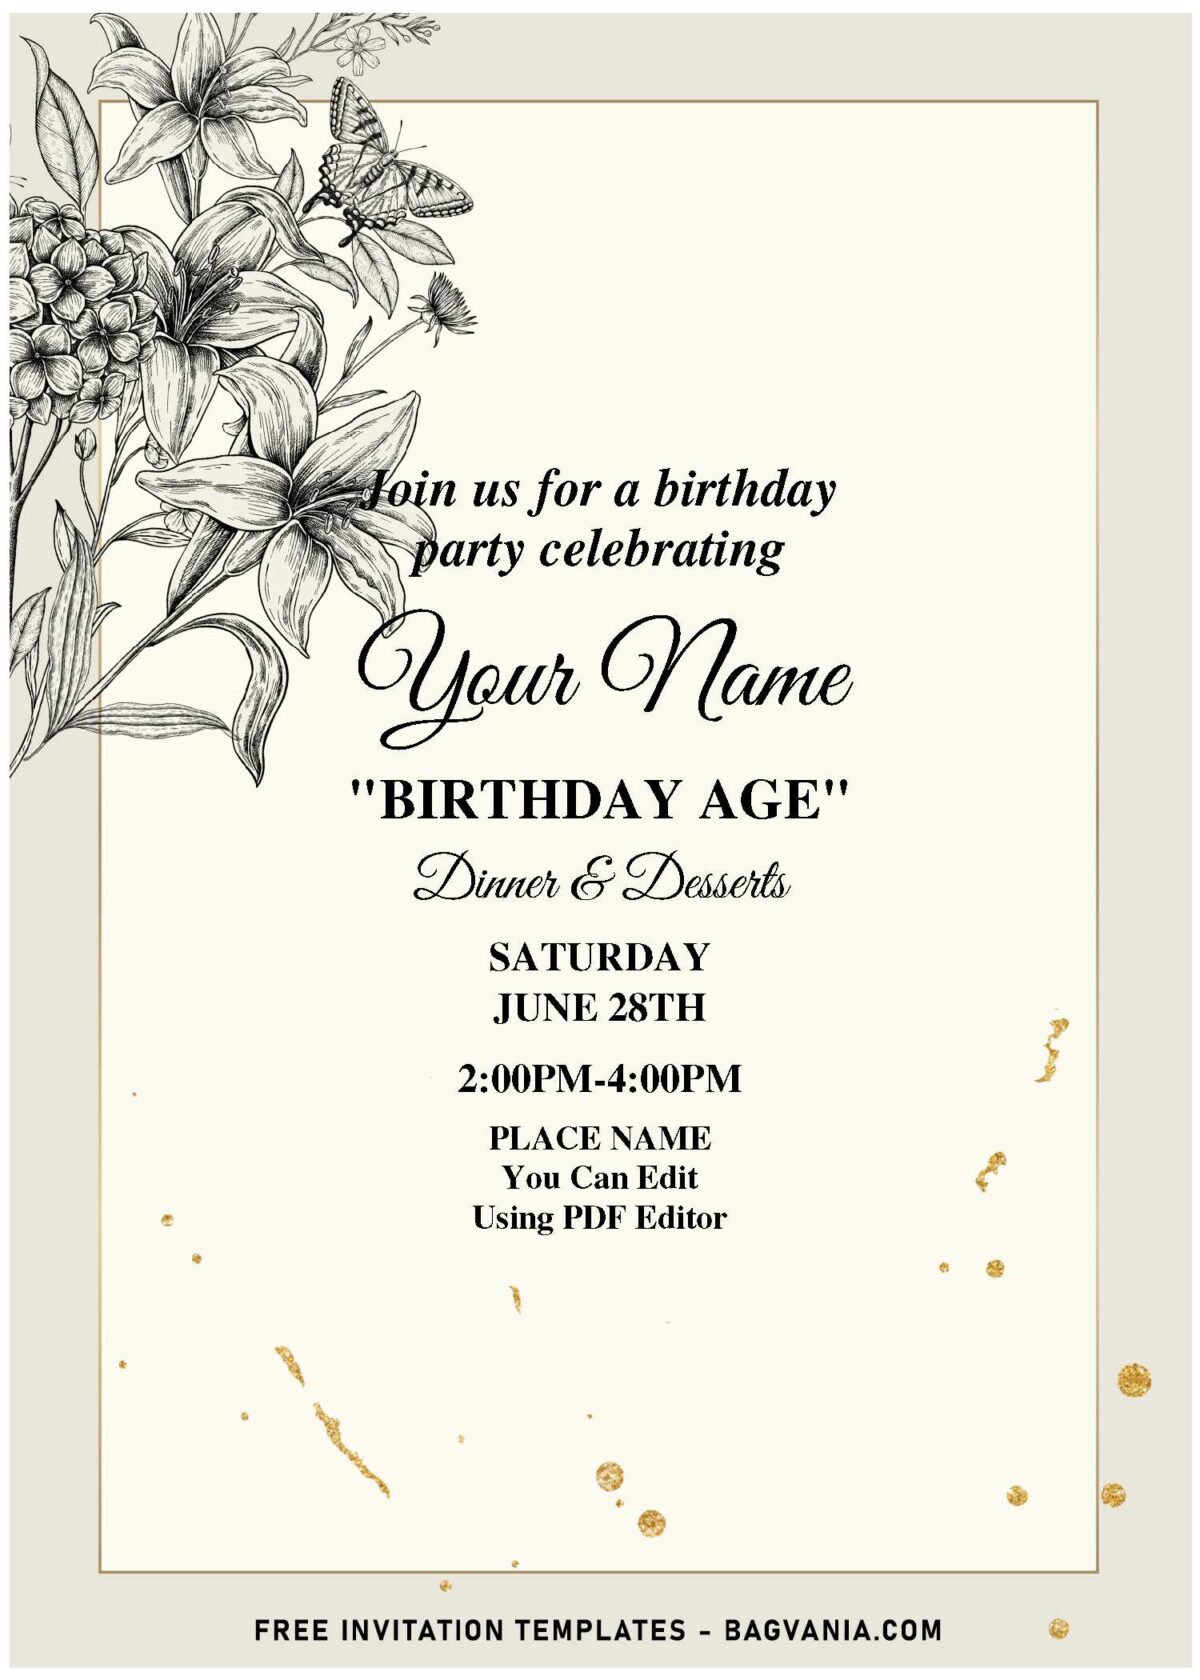 (Free Editable PDF) Monochrome Floral Evening Birthday Invitation Templates with hand drawn flowers